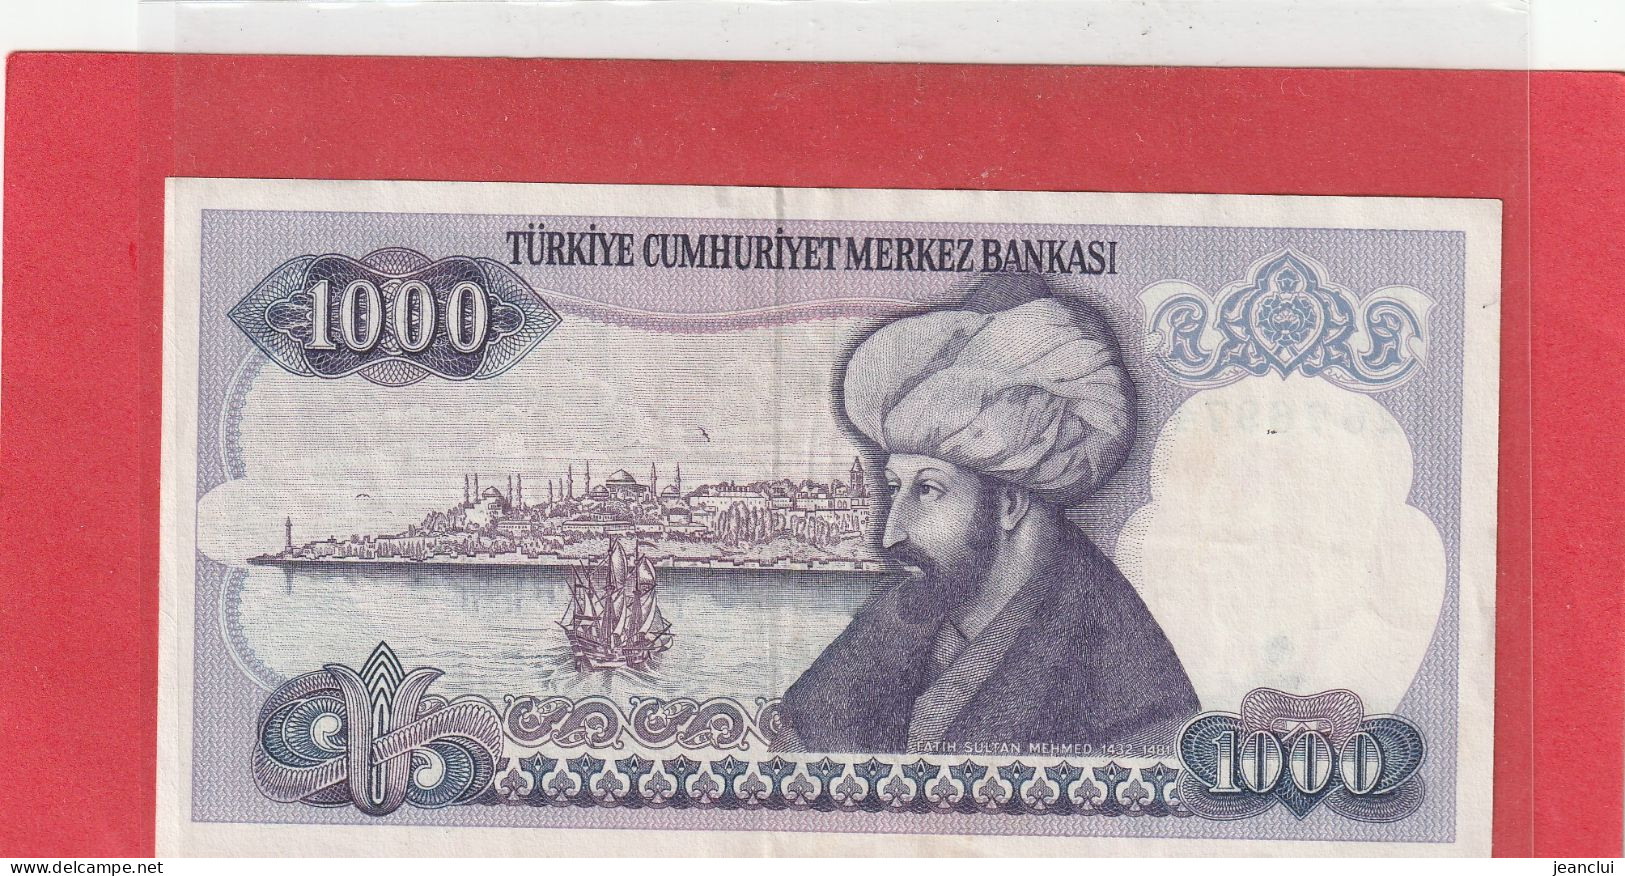 TURKIYE CUMHURIYET MERKEZ BANKASI . 1.000 LIRA . 14 OCAK 1970  . N°  A26 769745 .  2 SCANNES  .  BILLET USITE - Turkije